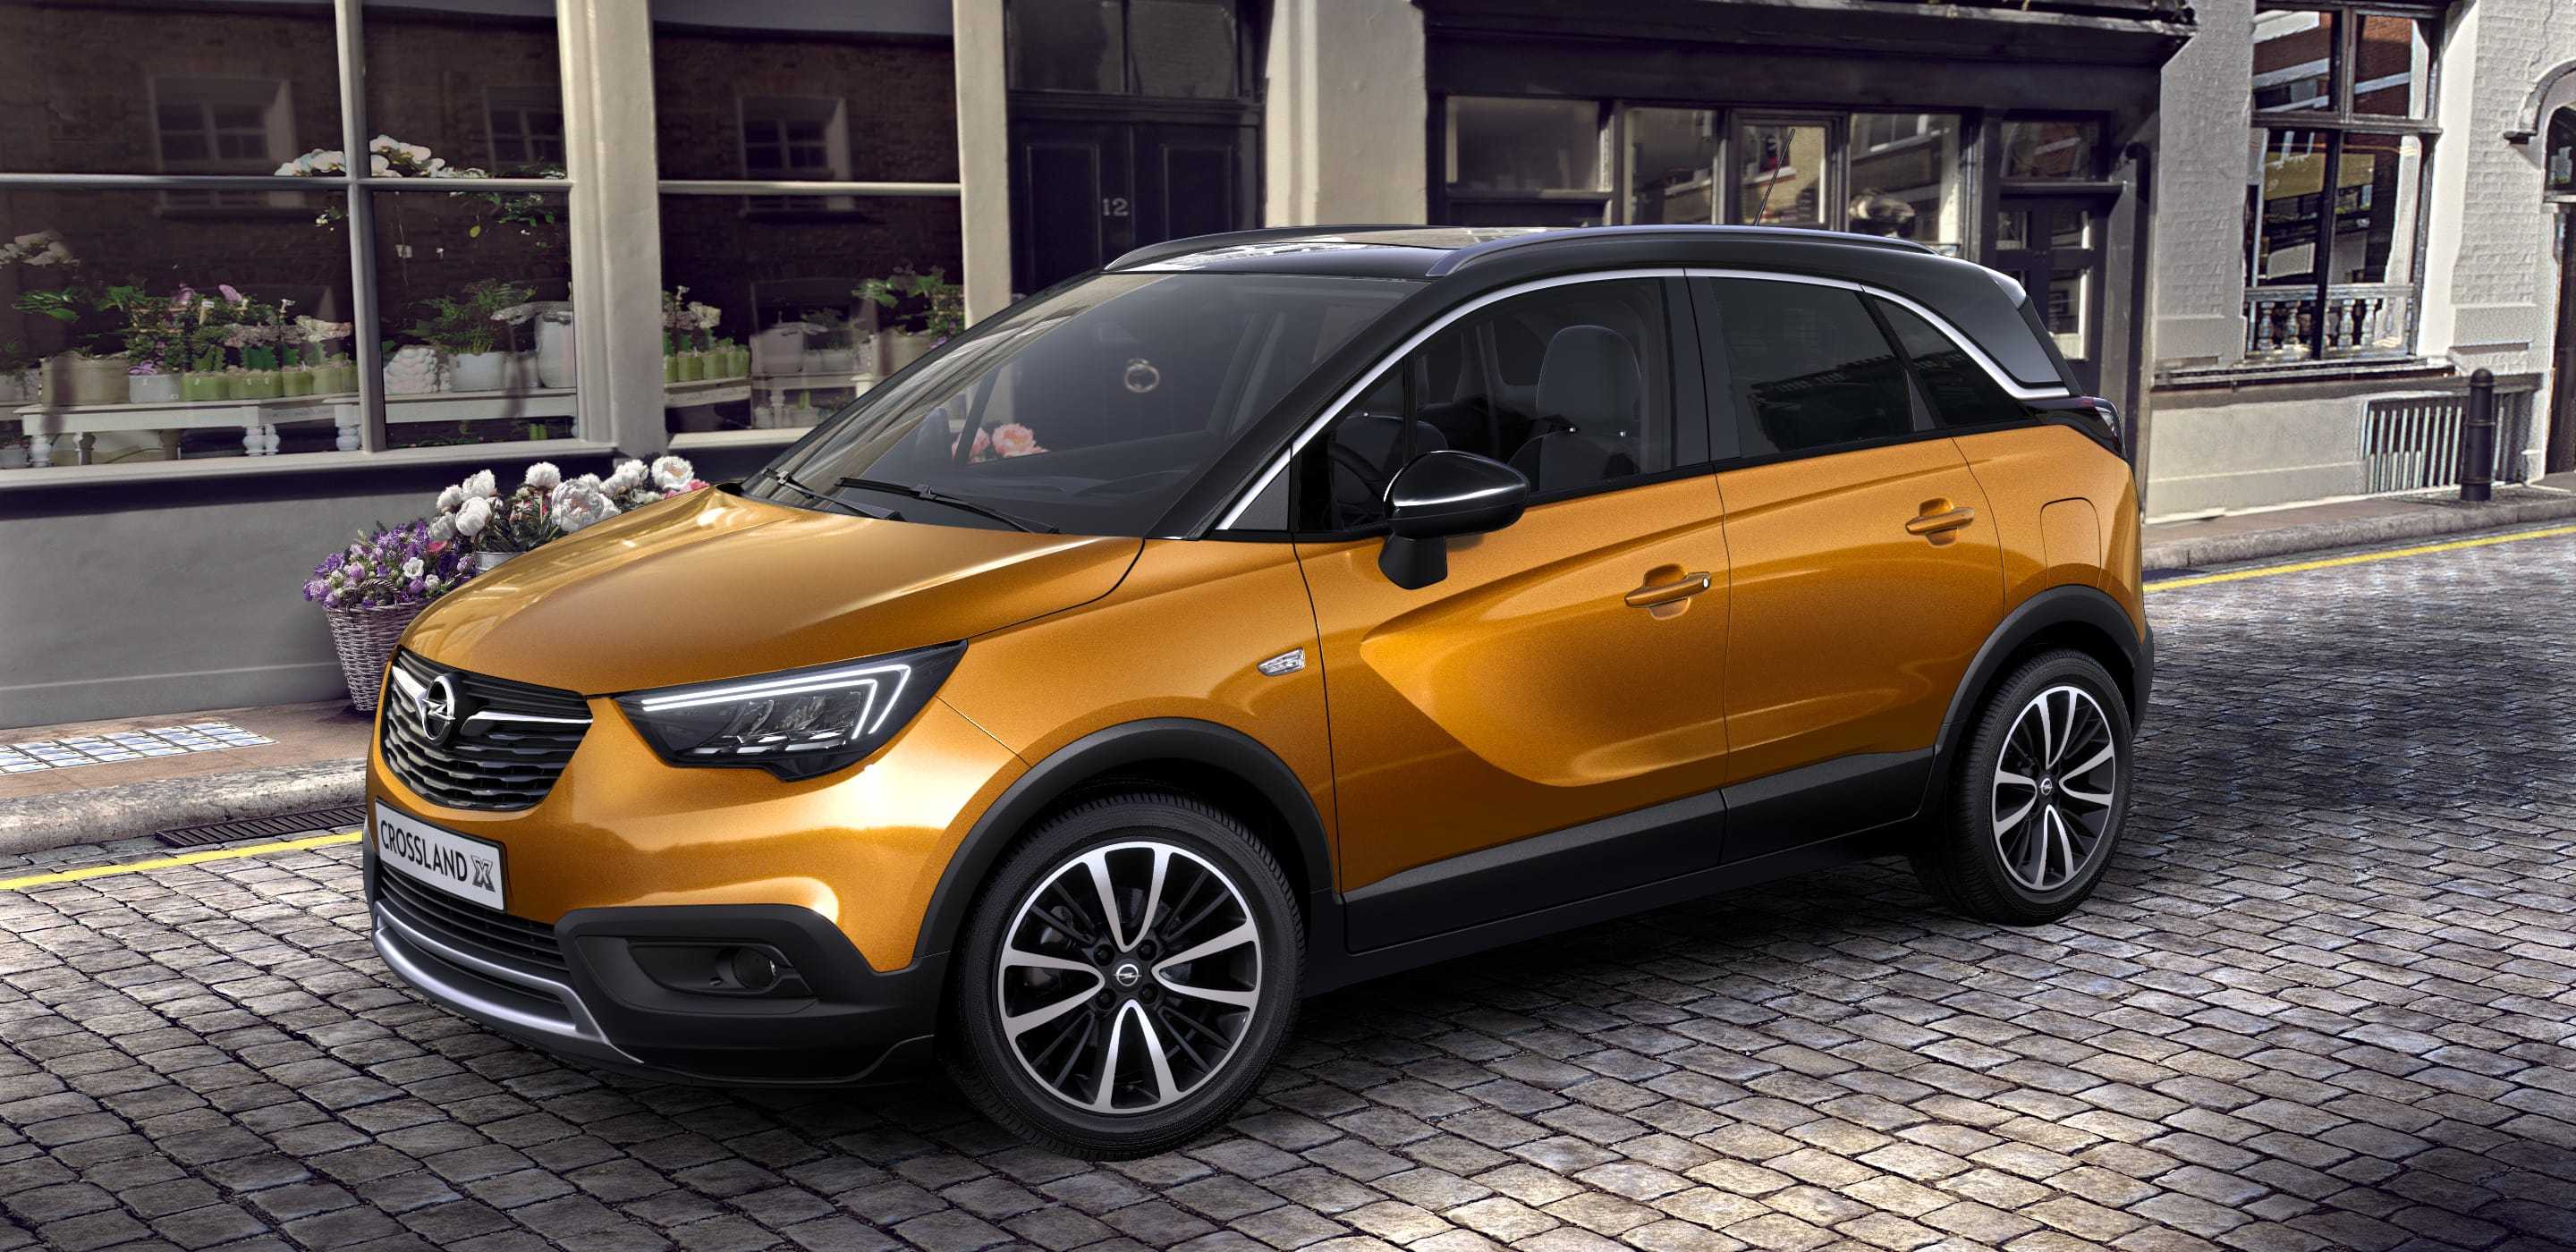 Opel crossland x 2020: небольшой семейный паркетник